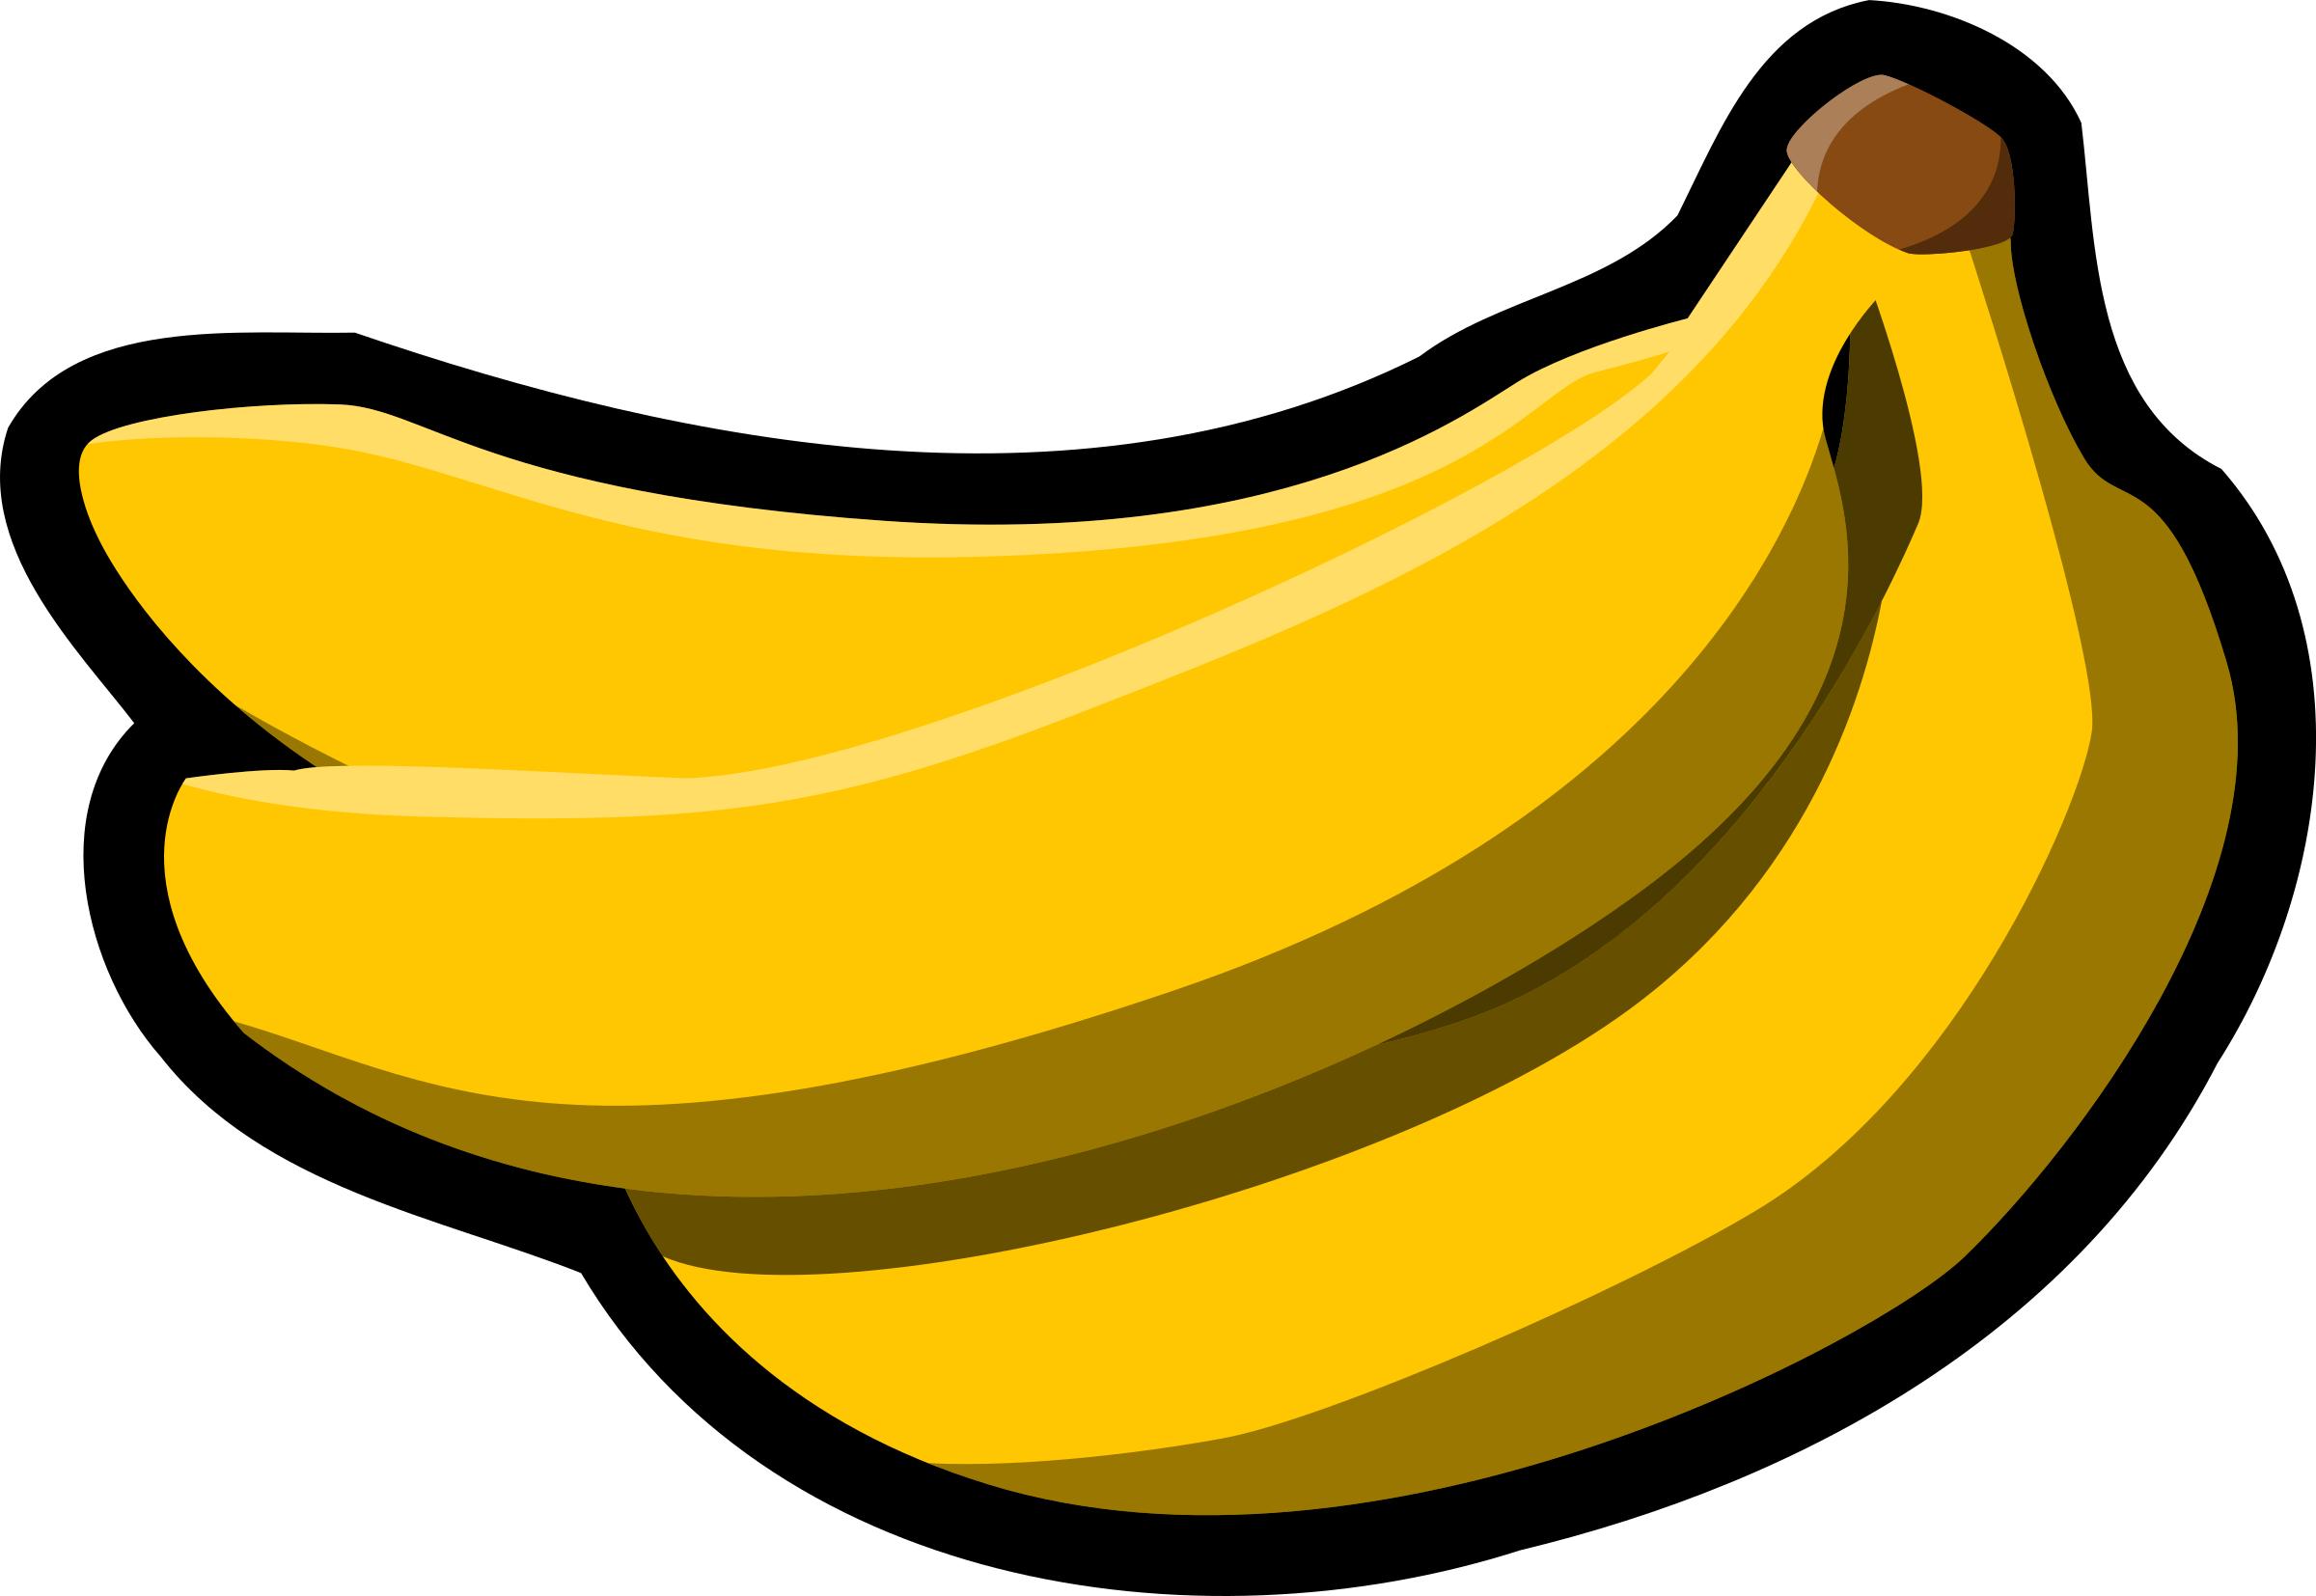 Bananas icon png